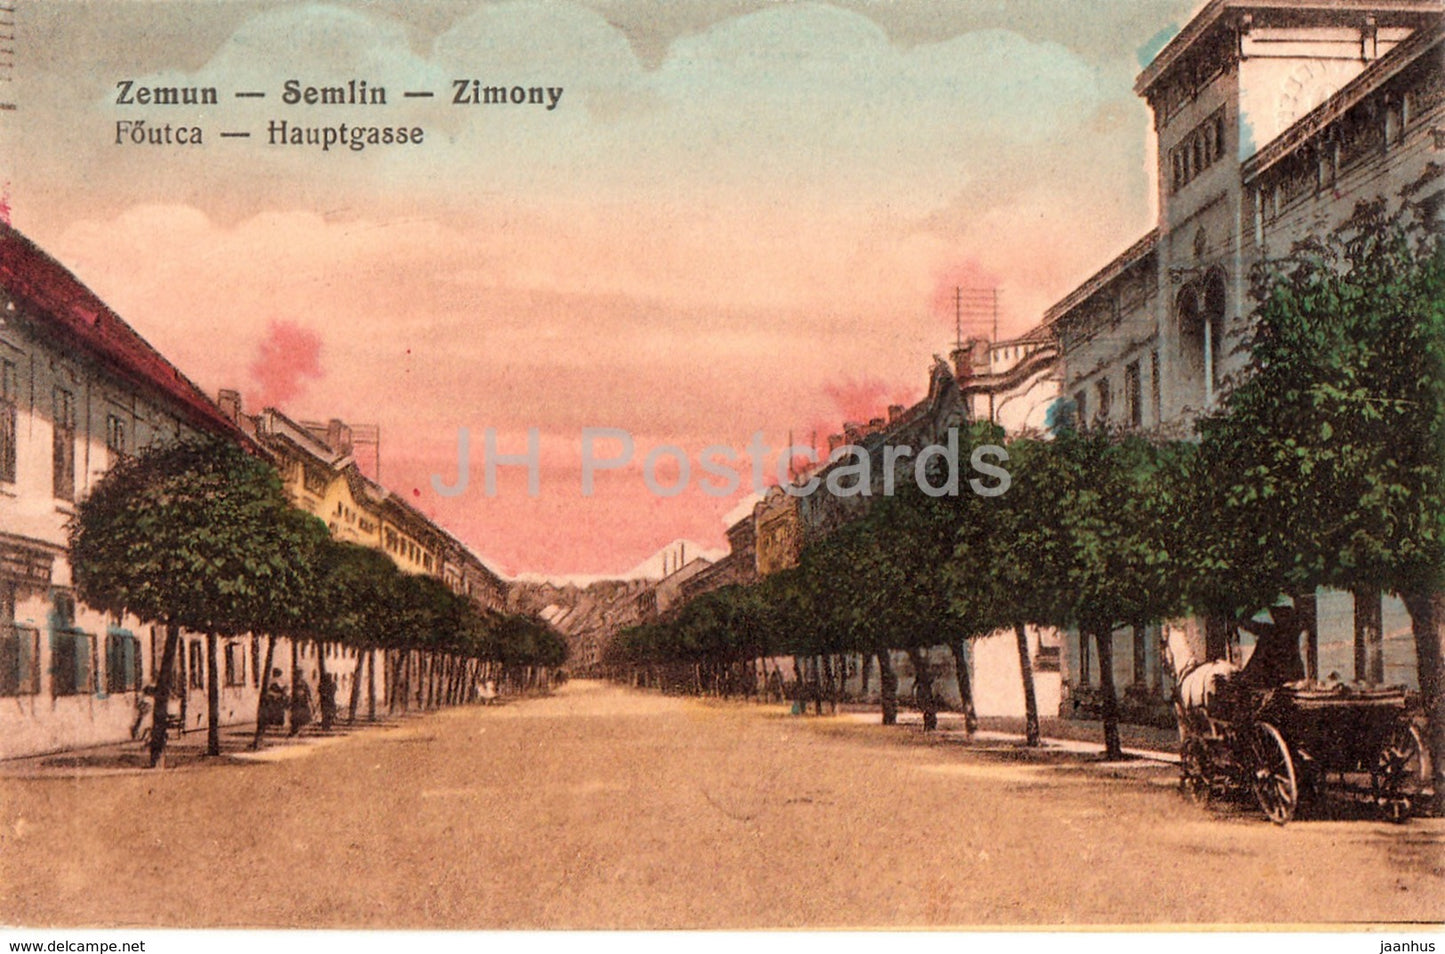 Zemun - Semlin - Zimony - Foutca - Hauptgasse - 376 - old postcard - Serbia - unused - JH Postcards